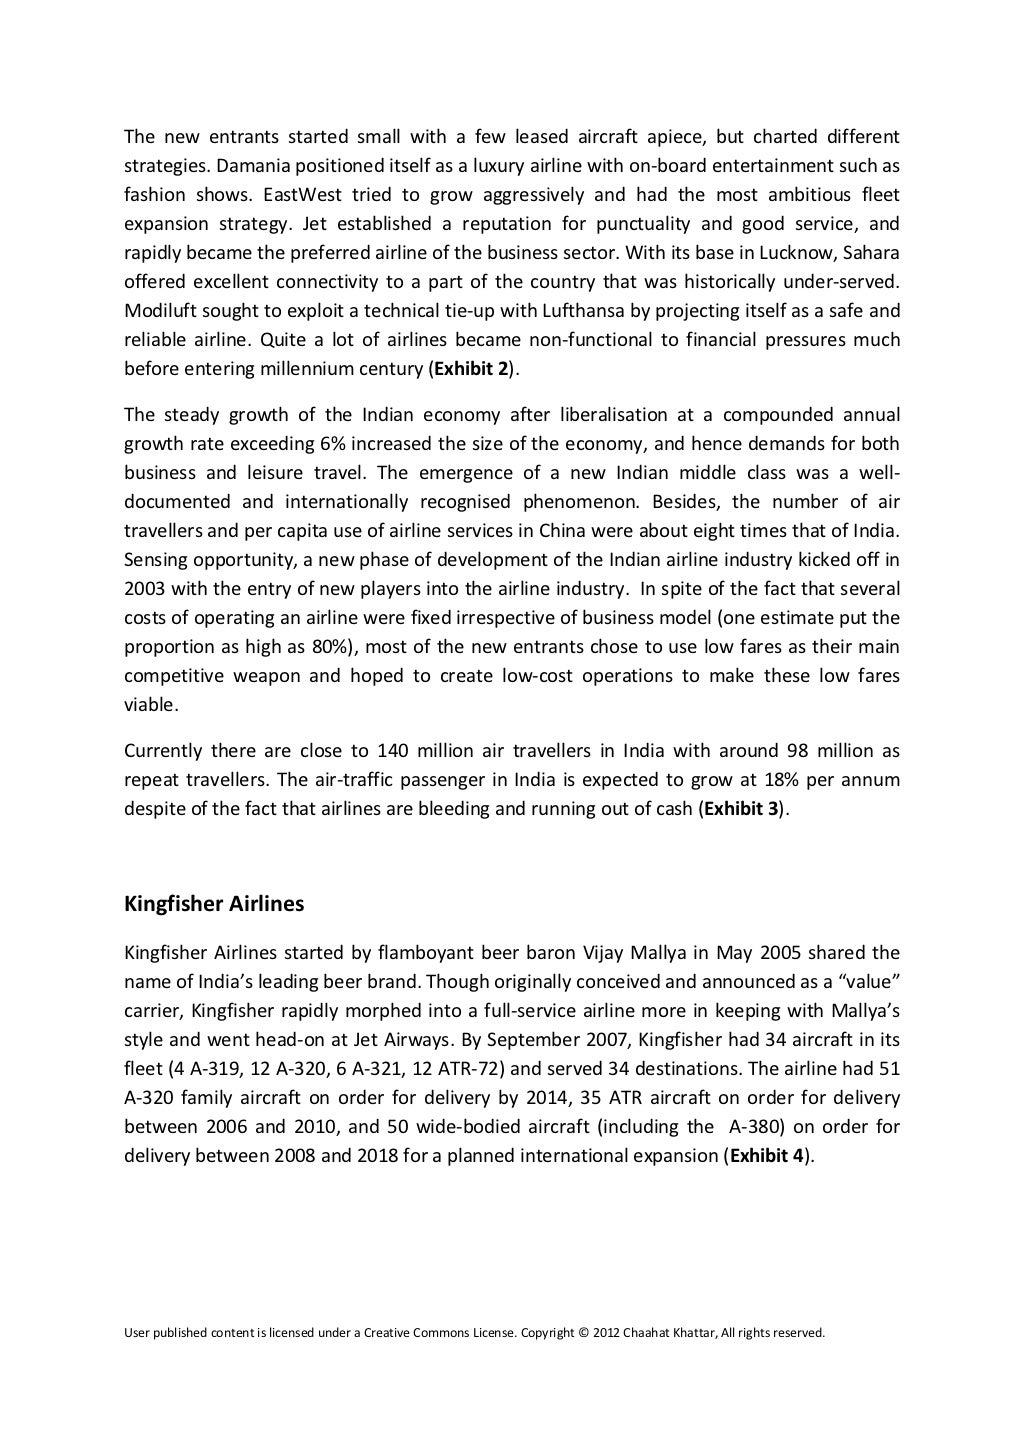 kingfisher case study pdf